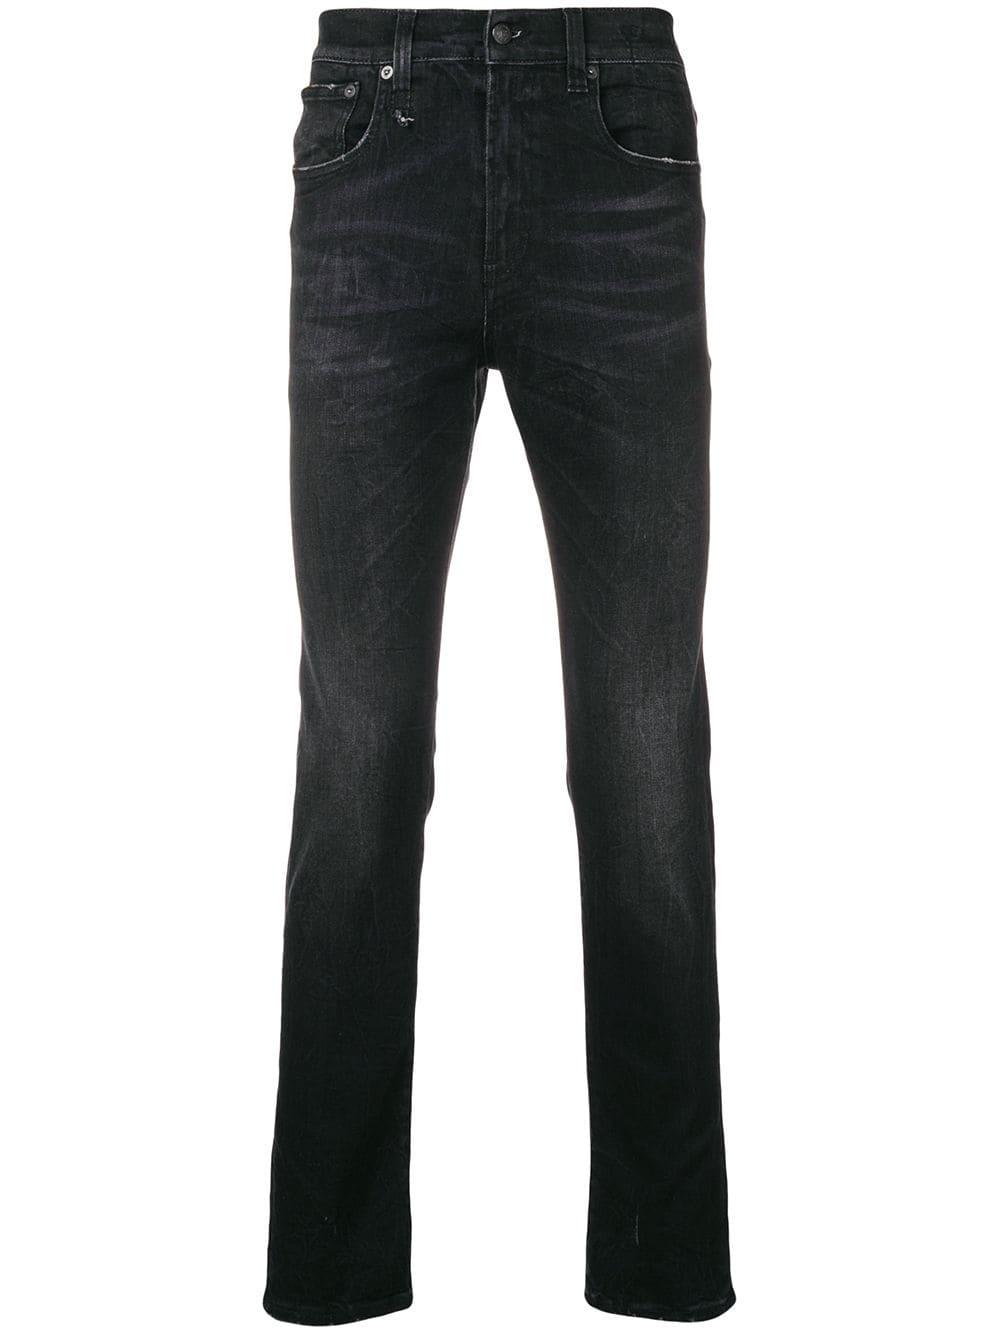 R13 Denim Skate Slim-fit Jeans in Black for Men - Lyst